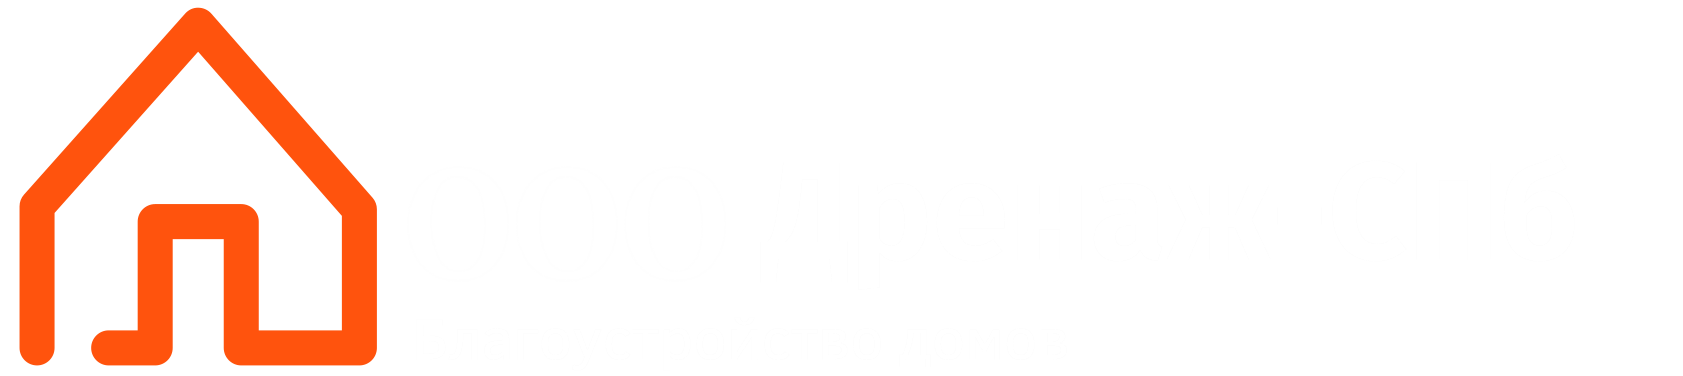 ООО-Дренаж-СПб